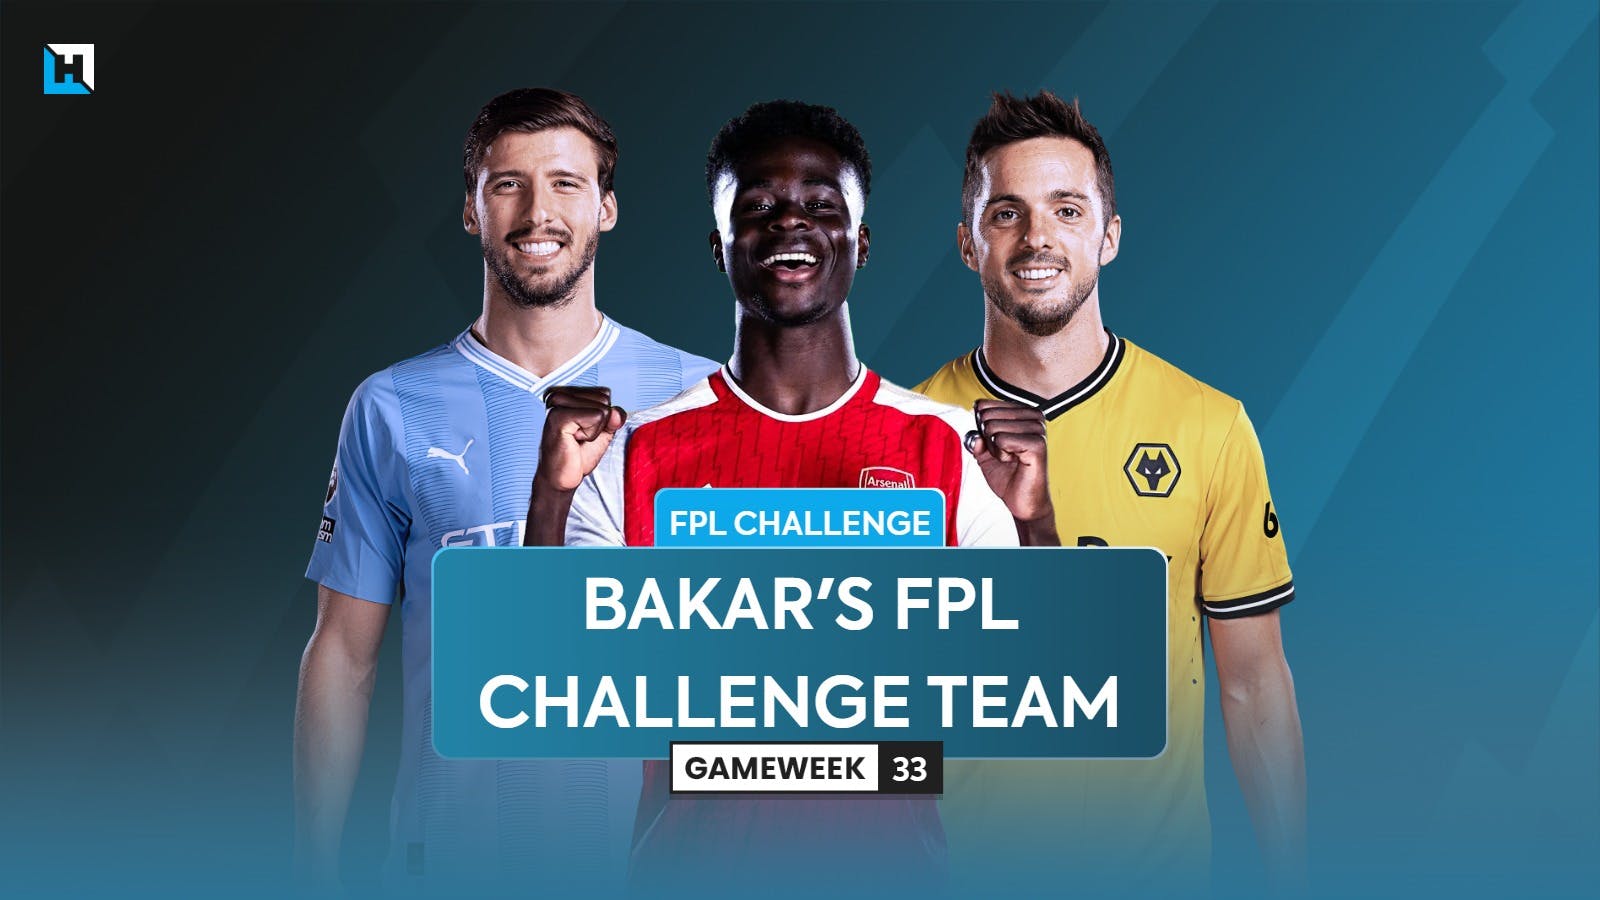 Bakar’s FPL Challenge team for Gameweek 33